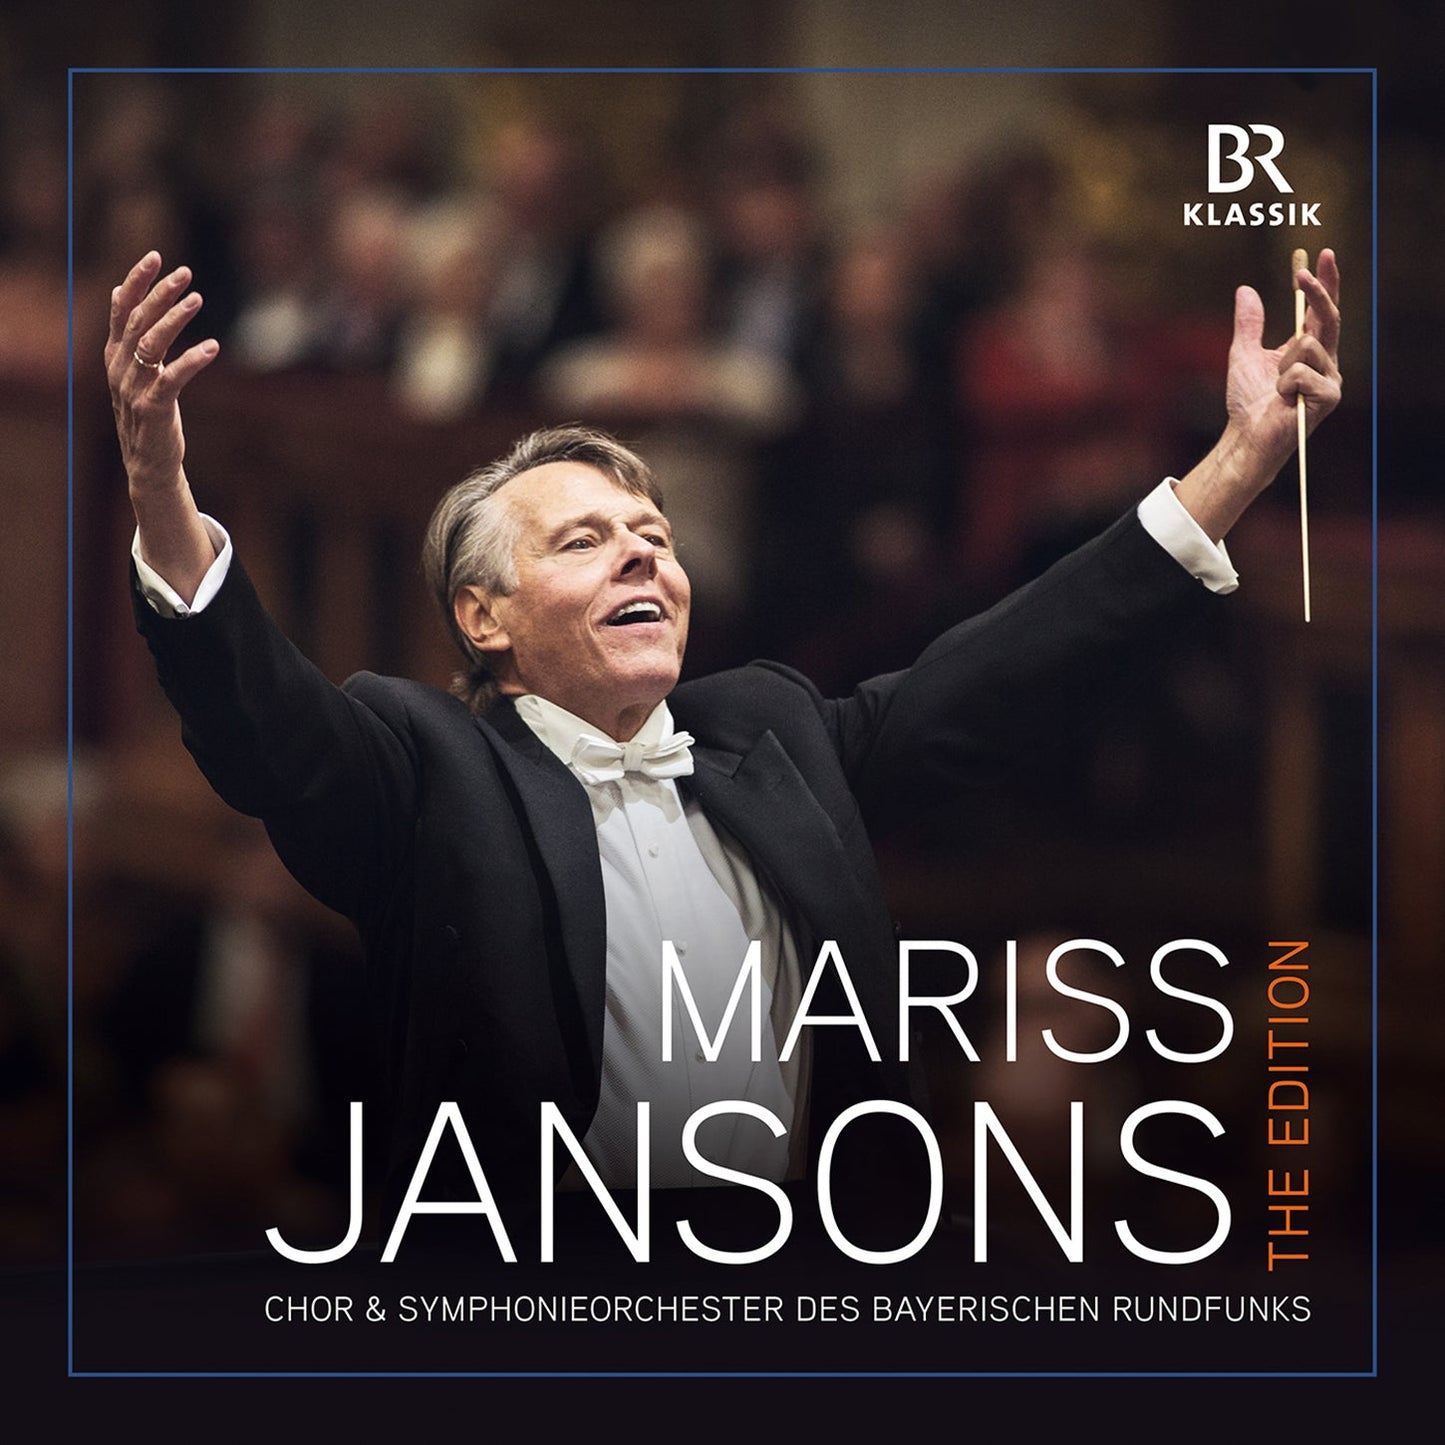 Mariss Jansons: The Edition